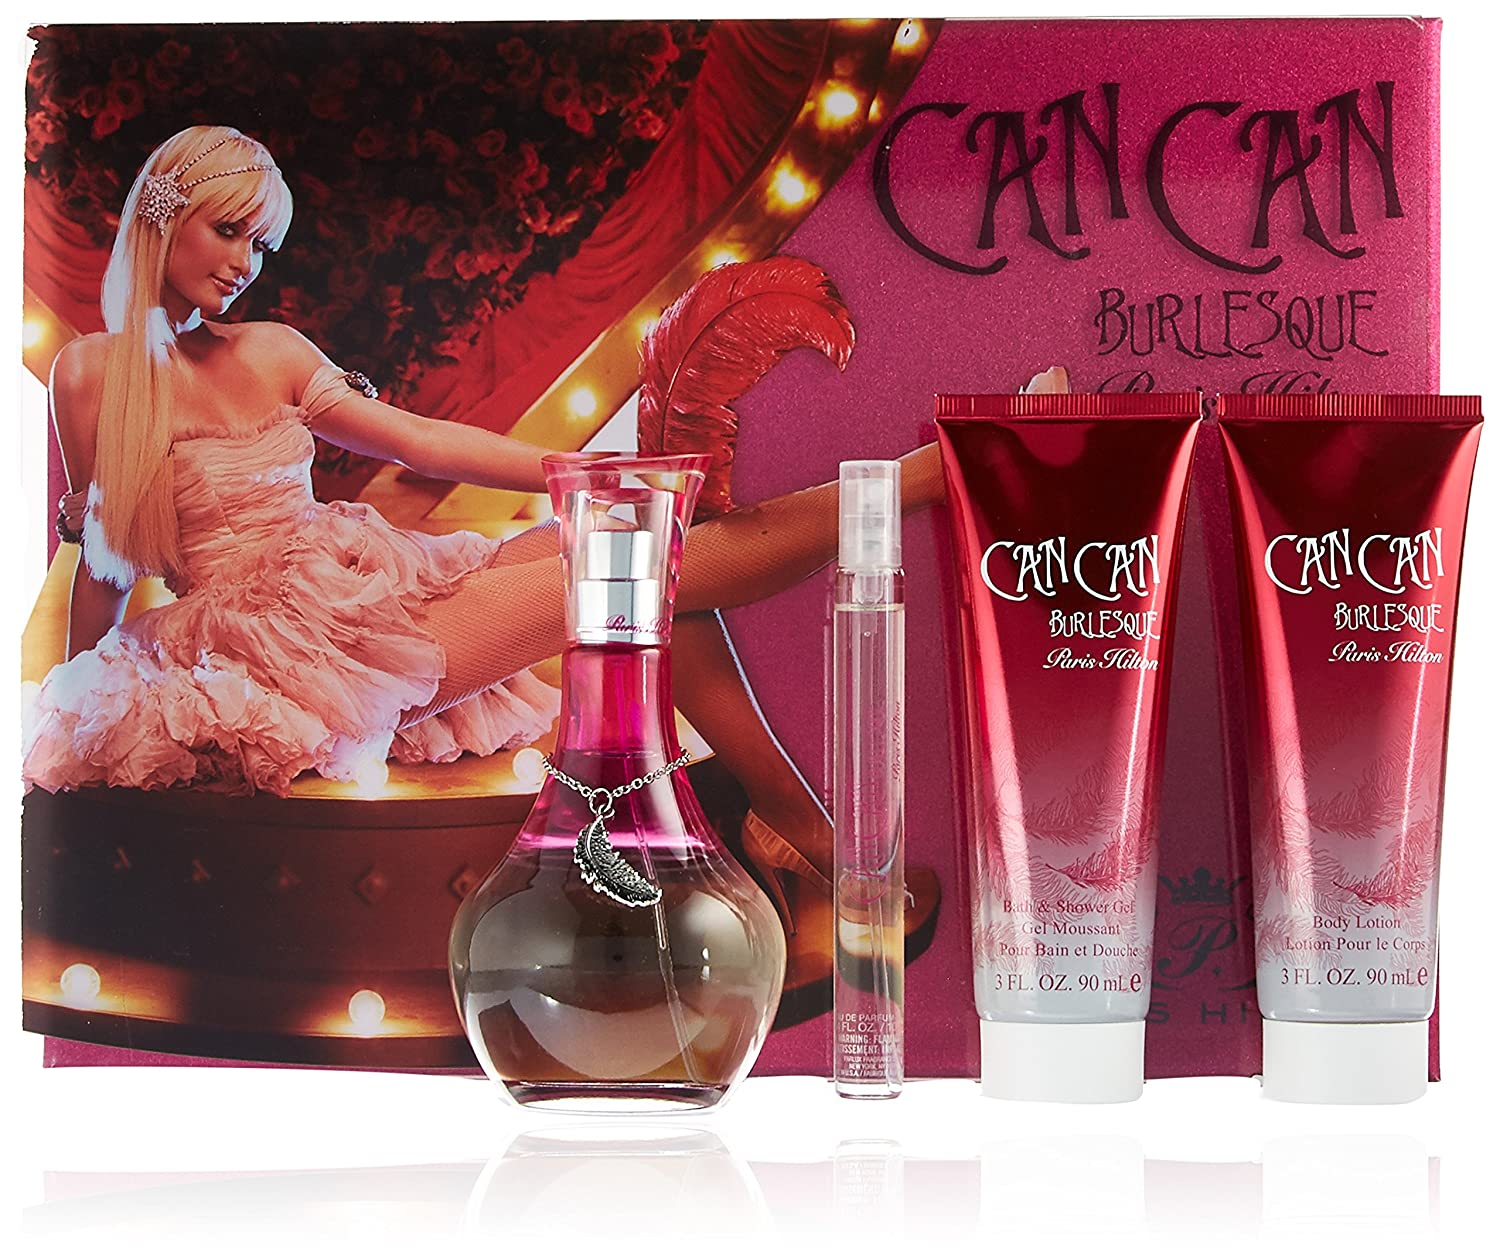 Set de fragancia Eau de parfum Paris Hilton Can Can para mujer